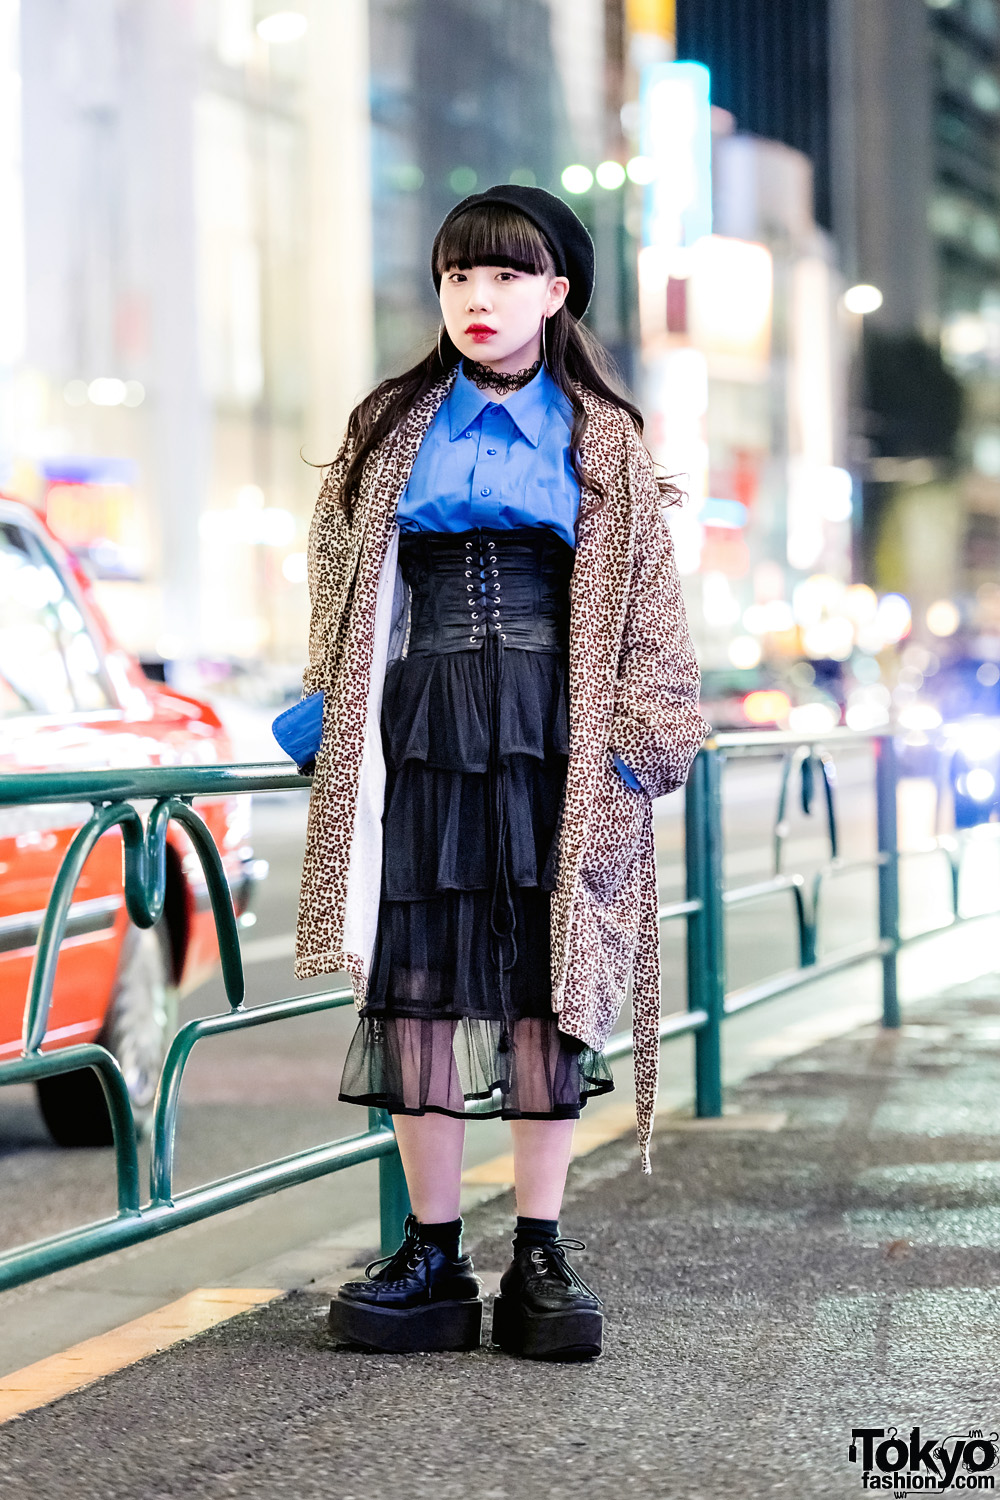 Vintage Harajuku Street Fashion w/ Leopard Coat, Black Corset, Tiered Skirt, Platform Wedge Shoes & Black Beret